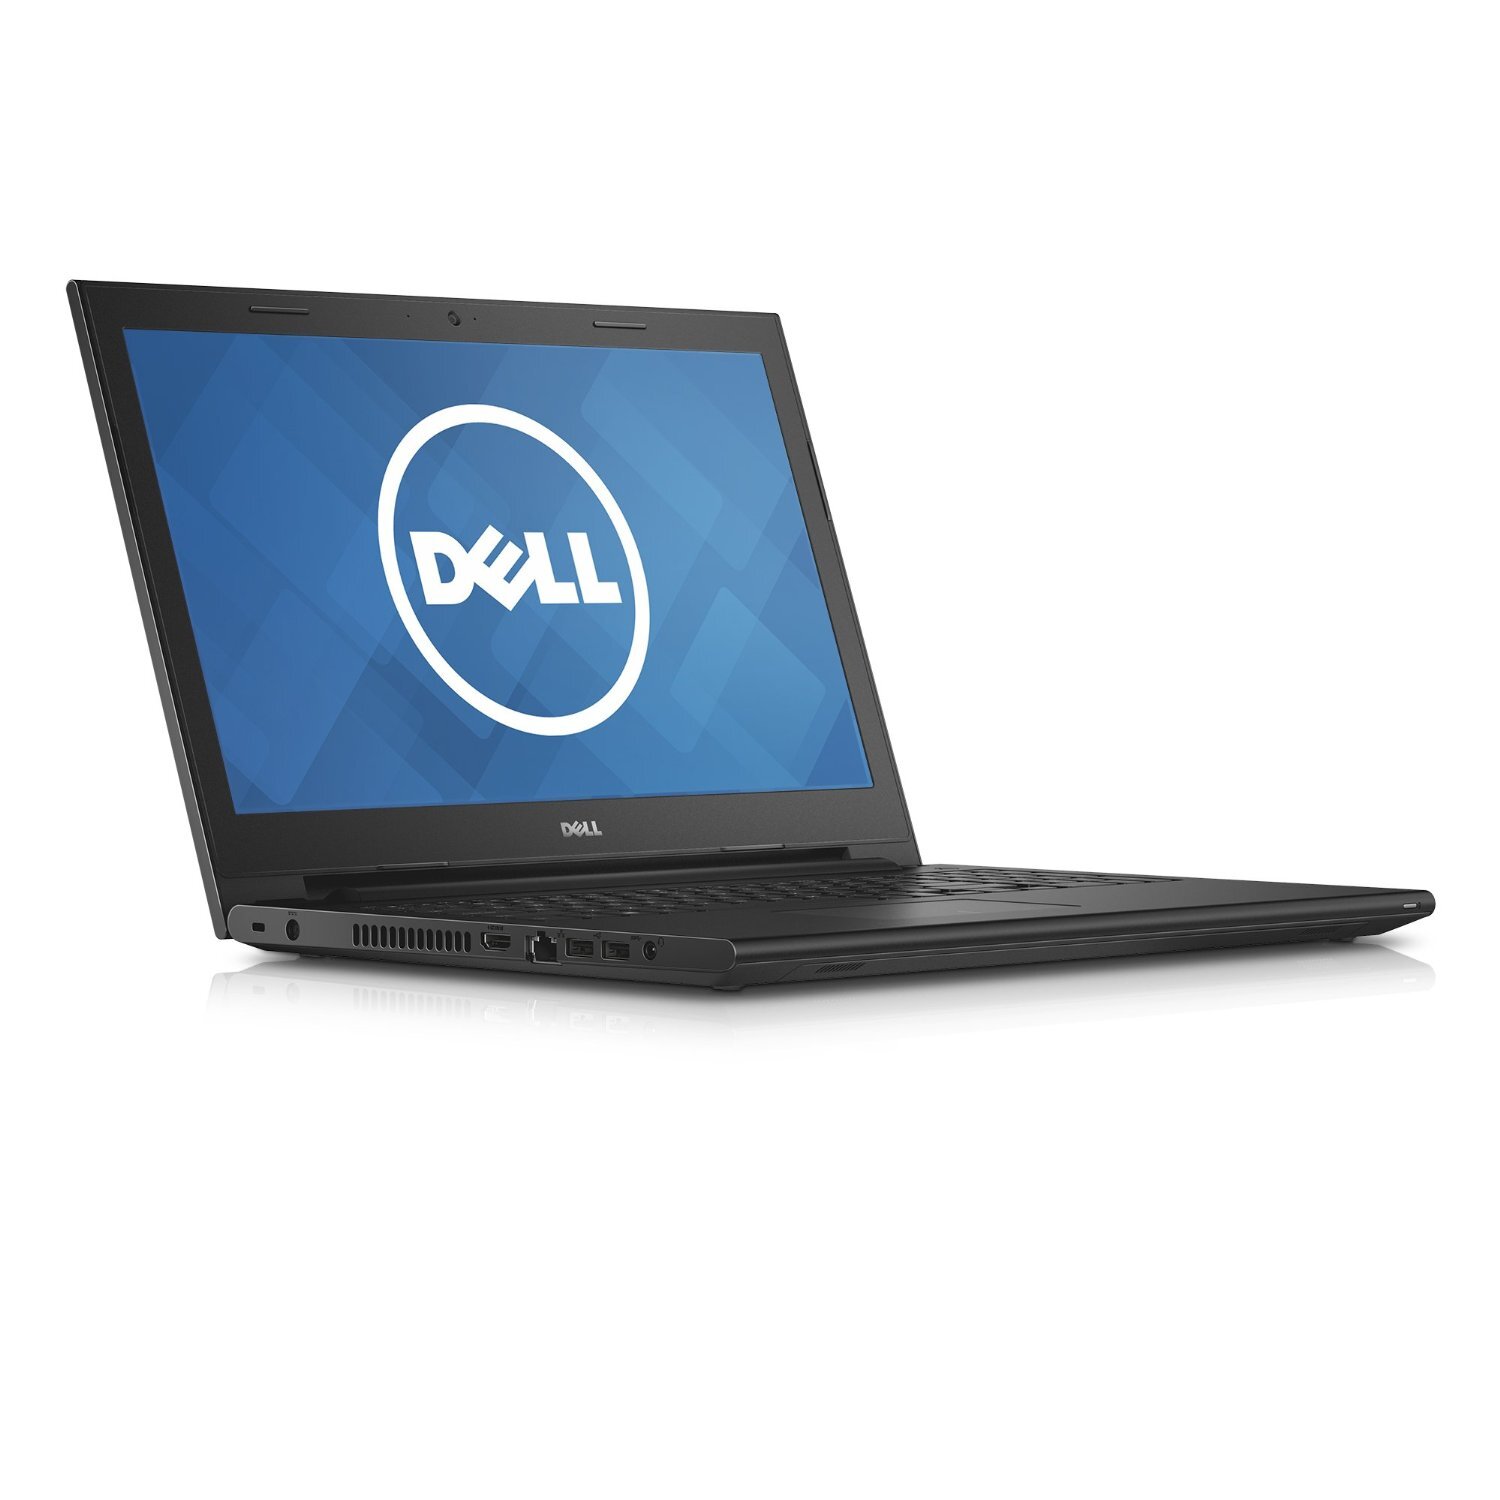 Laptop Dell Inspiron 3543 696TP3 - Intel Core i7 5500U, 8G RAM, 1T HDD, Nvidia Nvidia GeForce GT820M 2GB, 15.6 inch